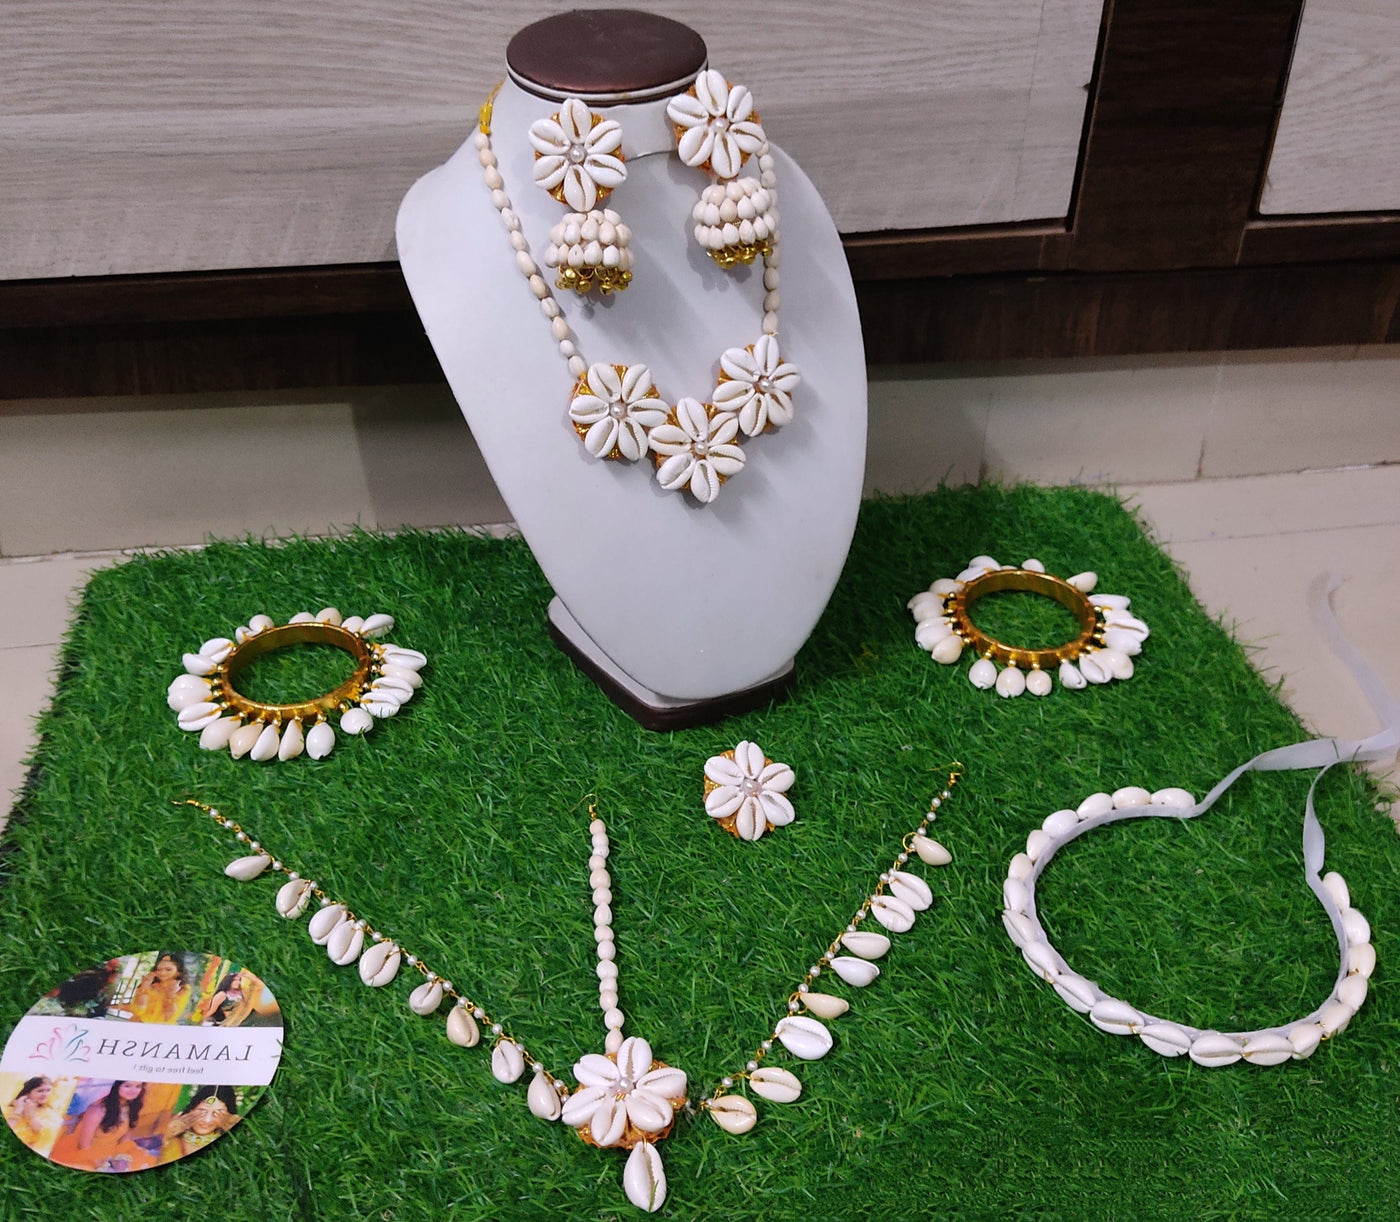 LAMANSH Flower Jewellery LAMANSH® Shells 🐚 X Mogra Collection Floral Jewellery Set 🌺 / Mogra Flower Bridal jewellery Set for haldi mehendi ceremony